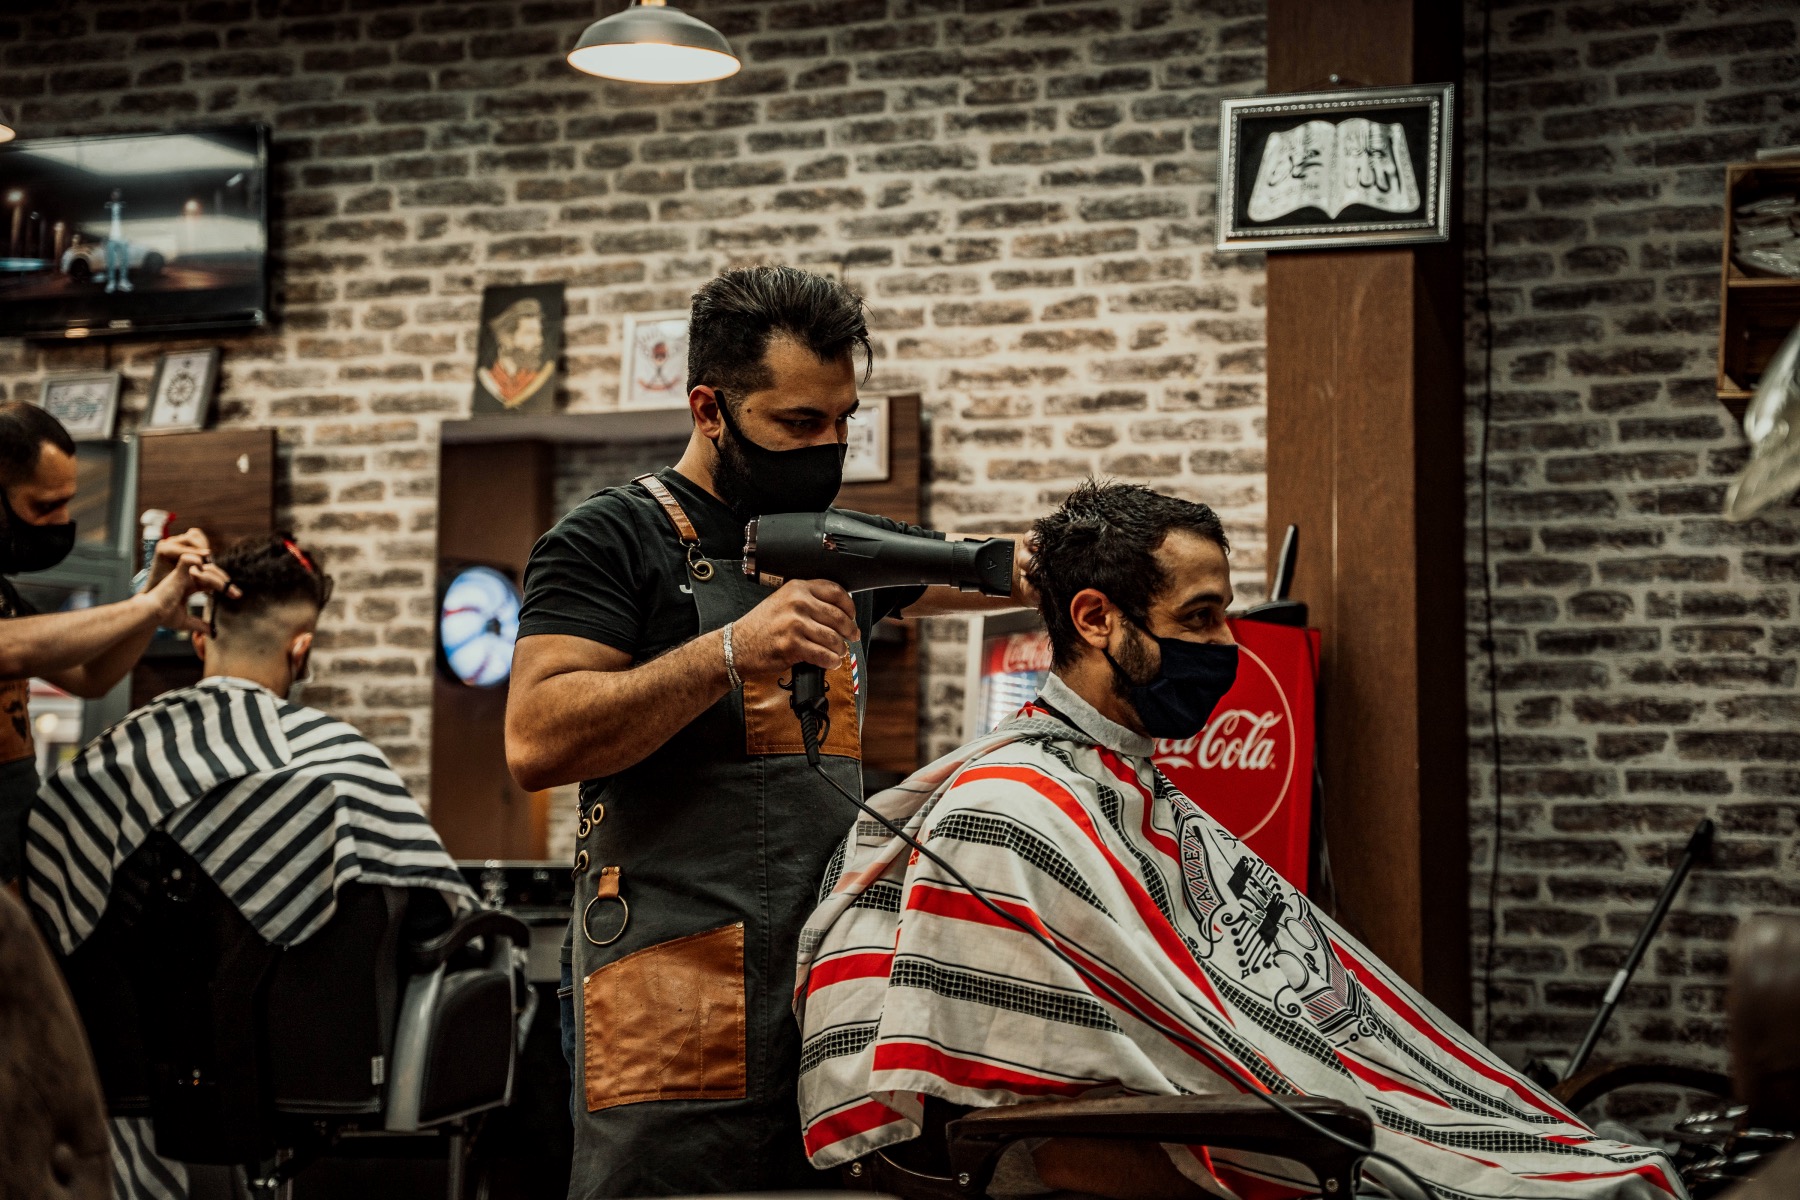 geheimtipp Augsburg classic barber – ©Herzbube